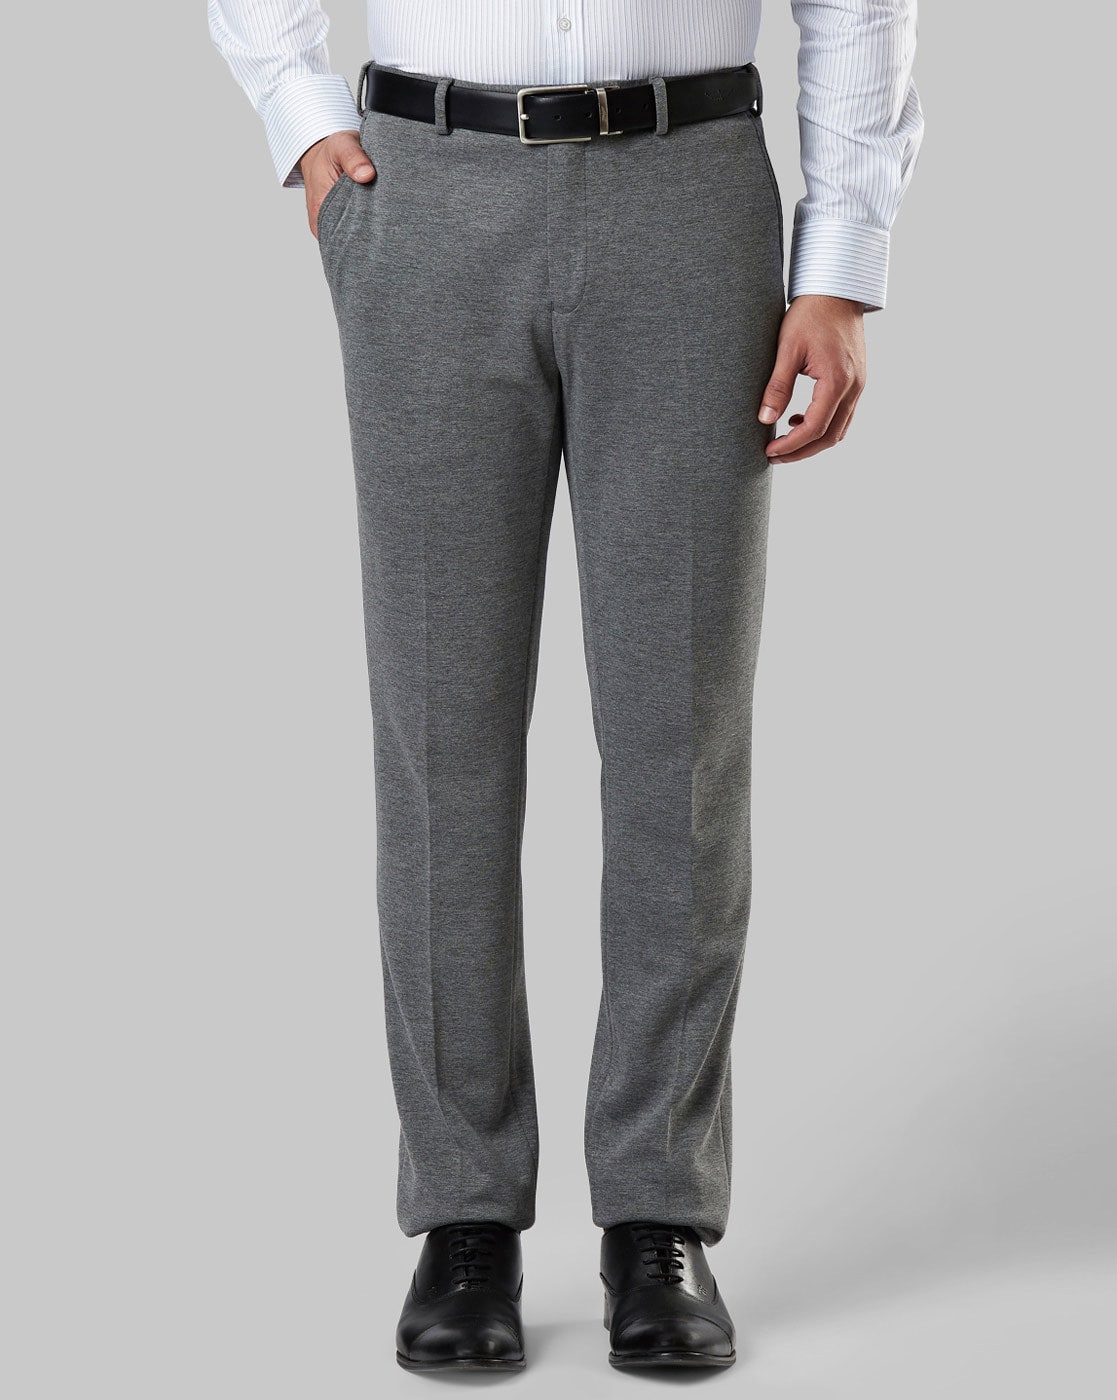 Buy Khaki Trousers & Pants for Men by RAYMOND Online | Ajio.com